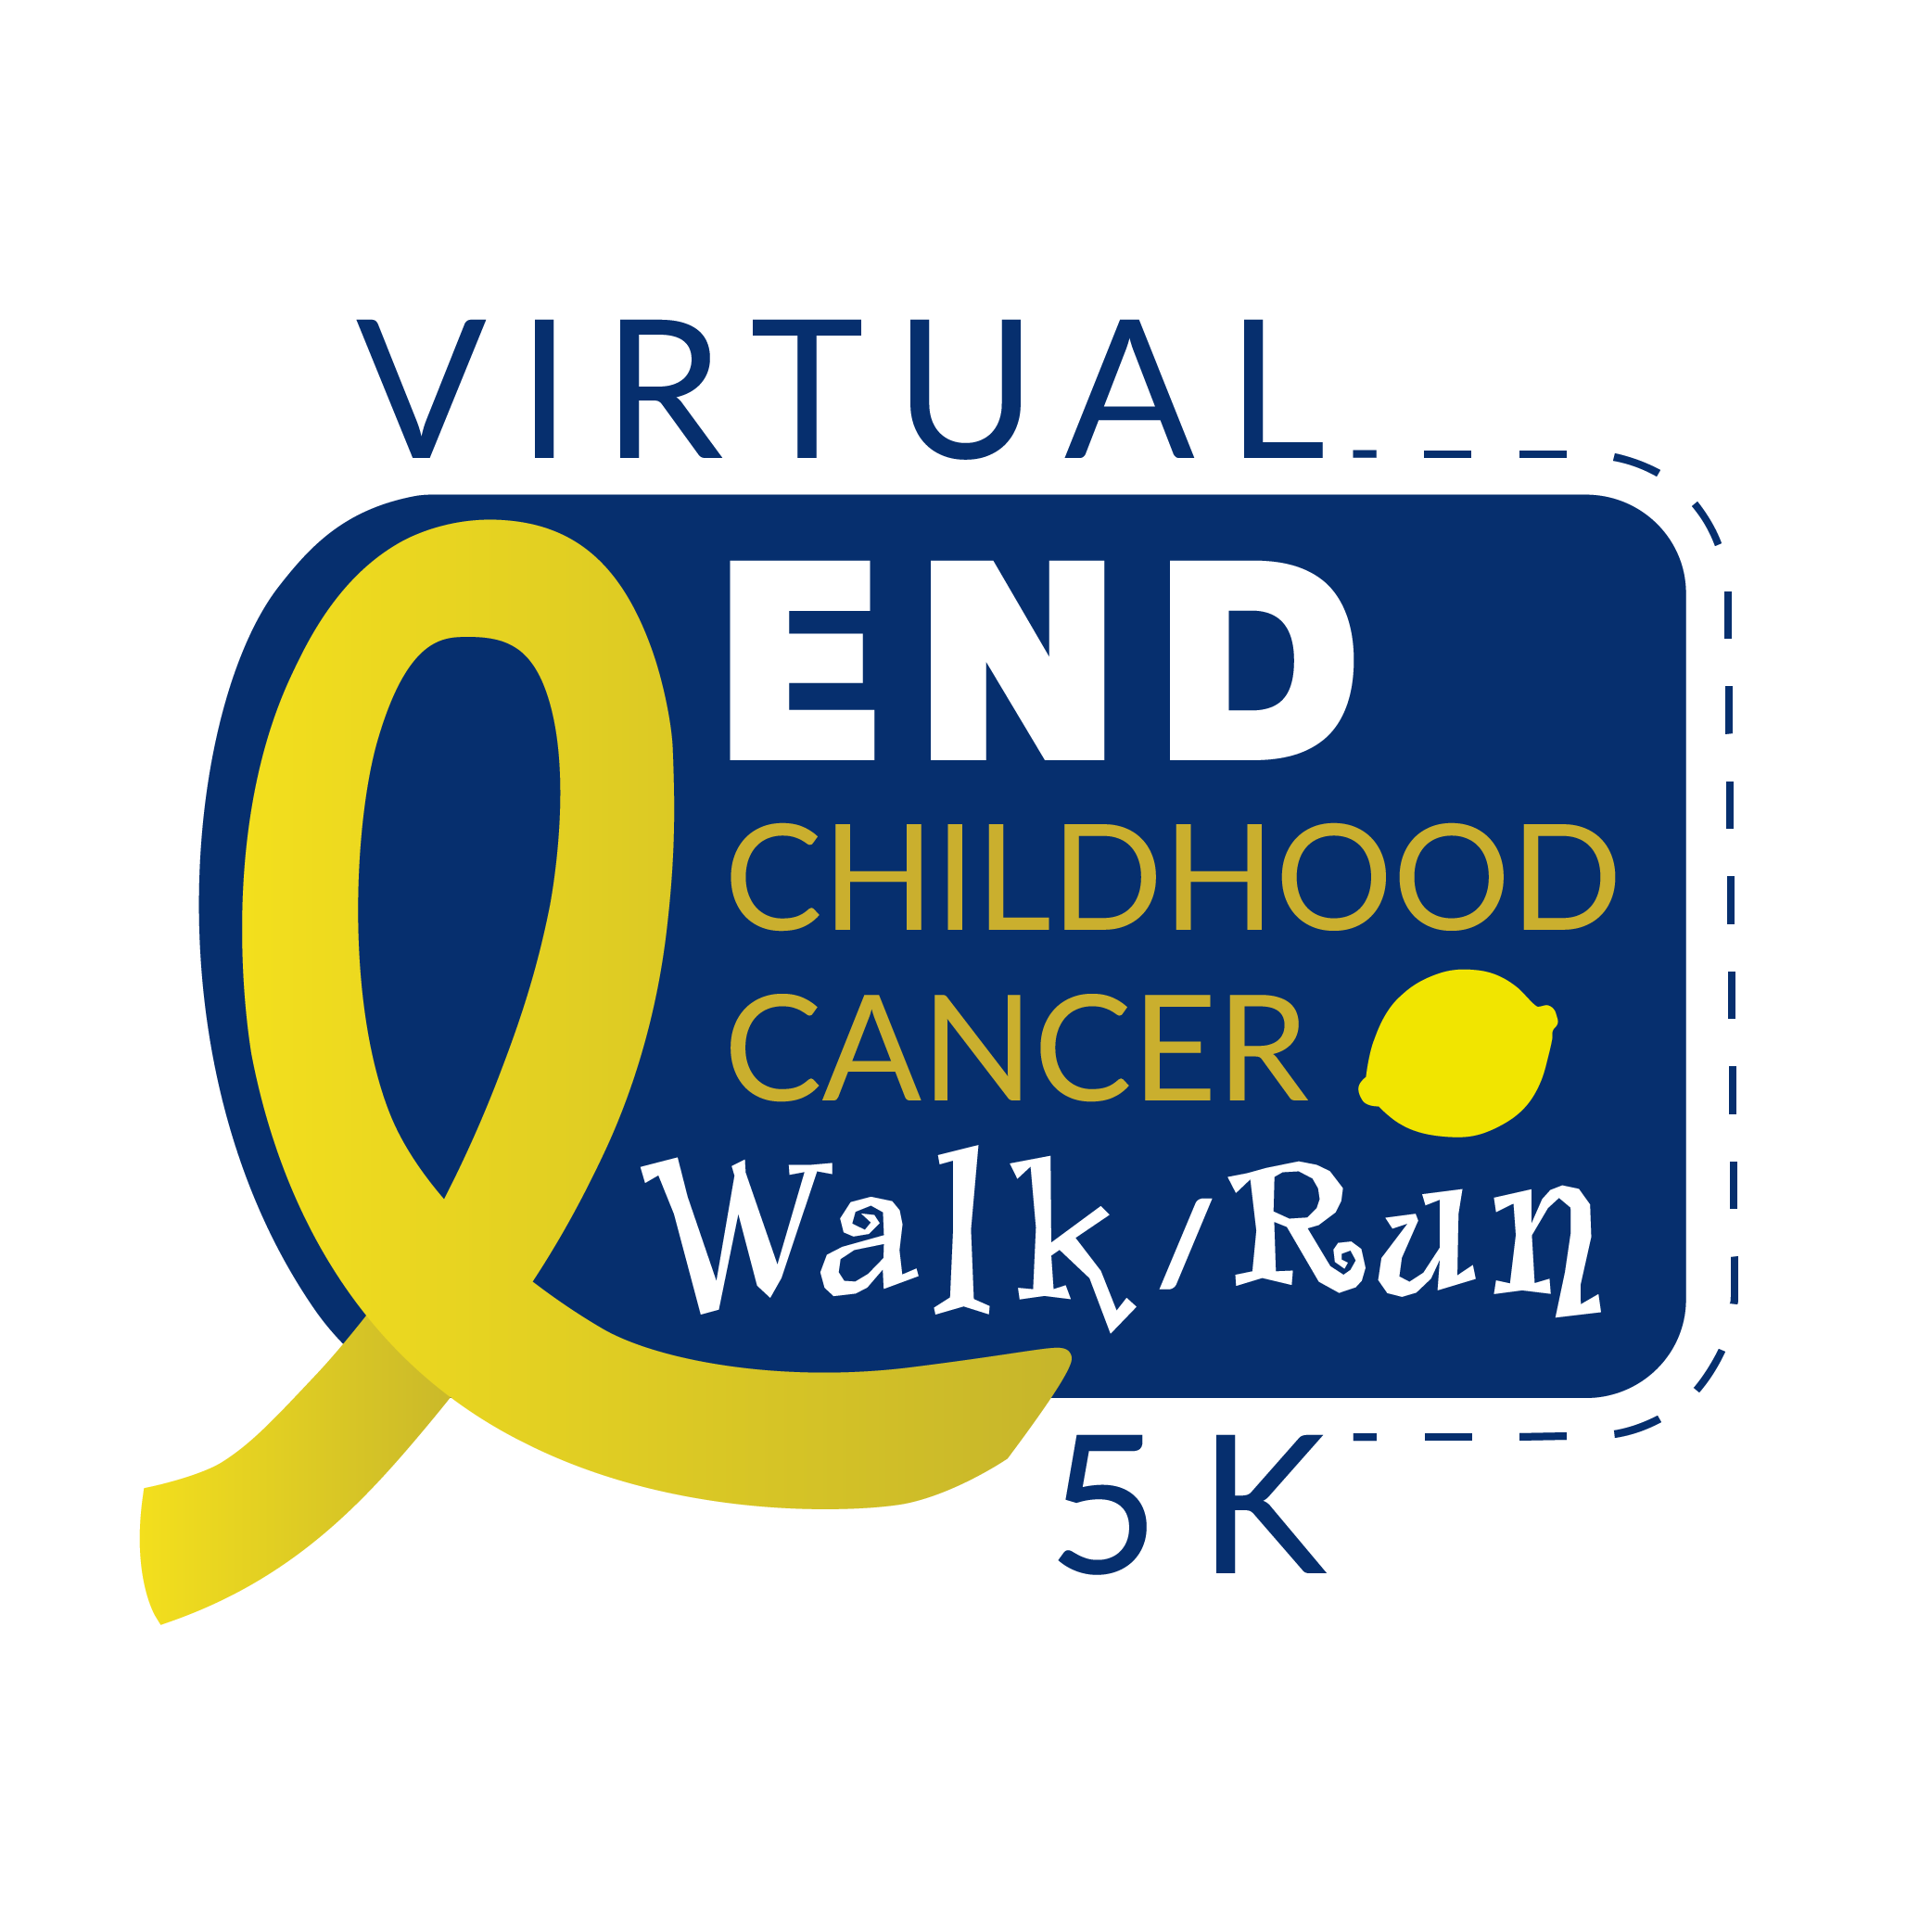 End Childhood Cancer Walk/Run